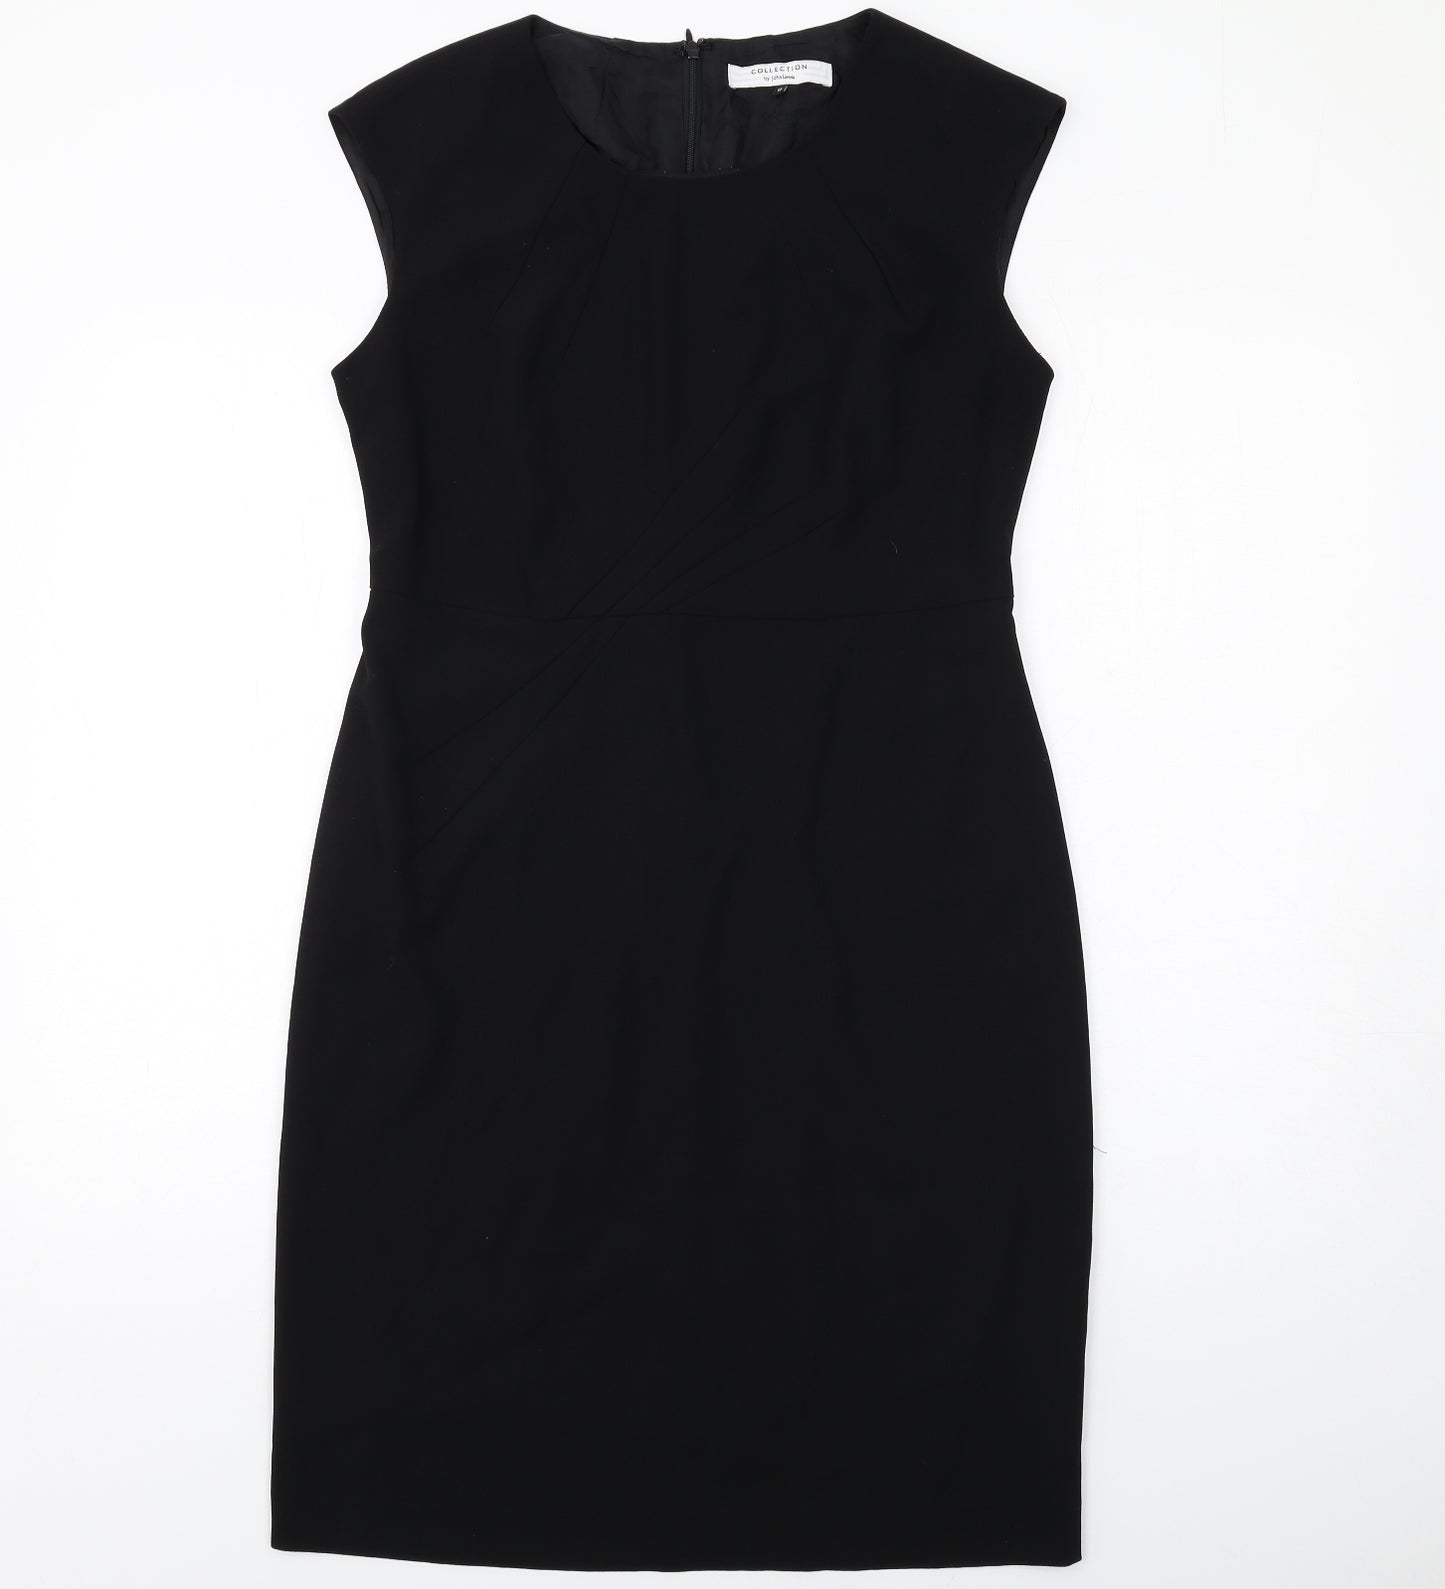 John Lewis Womens Black Polyester Shift Size 12 Round Neck Zip